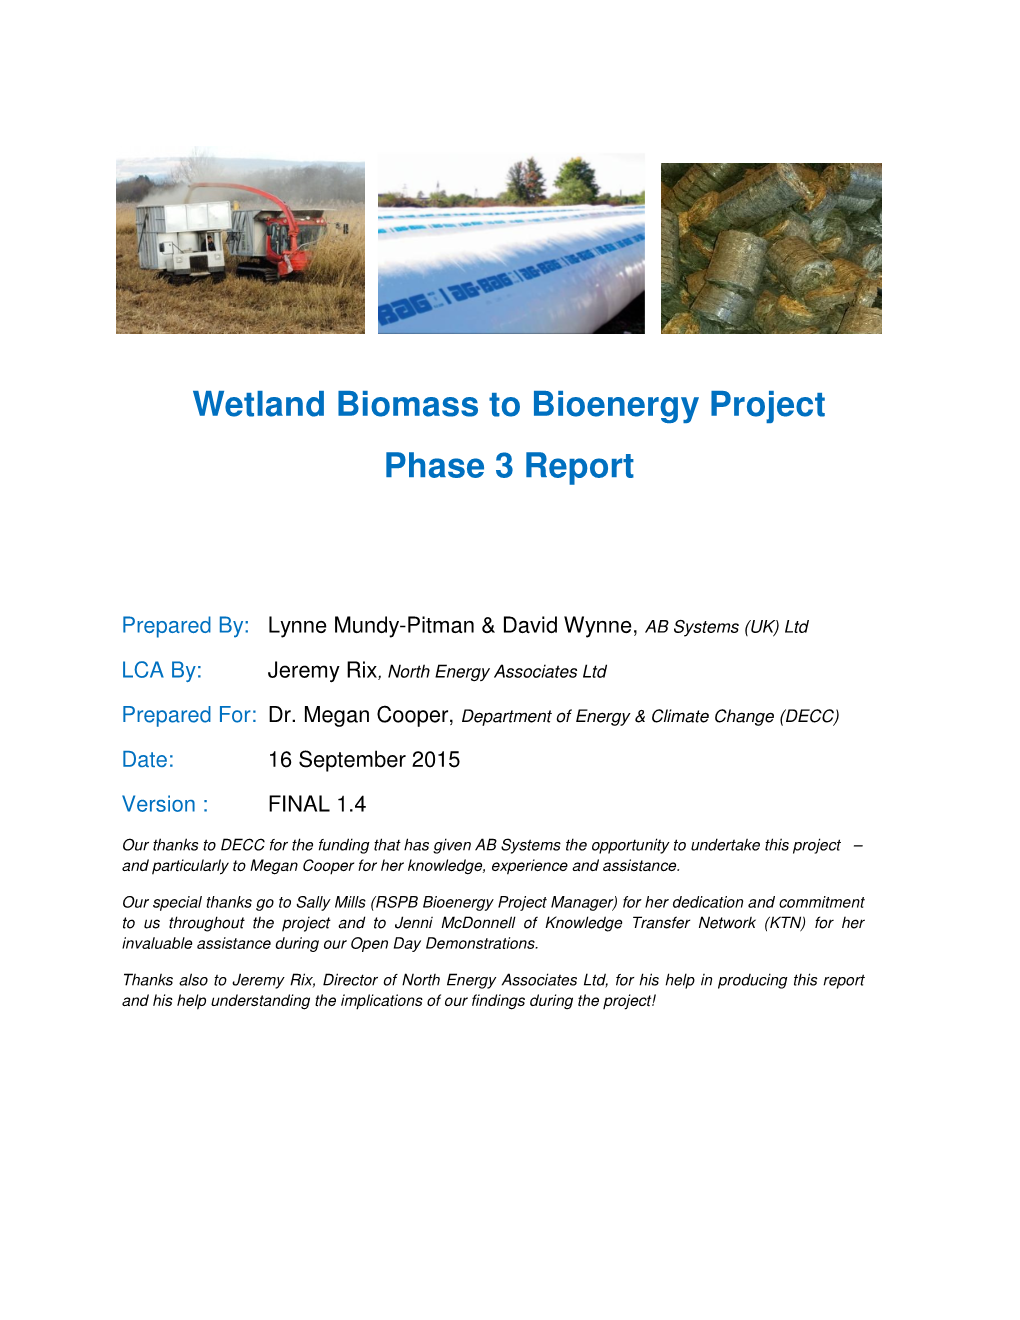 Wetland Biomass to Bioenergy Project Phase 3 Report